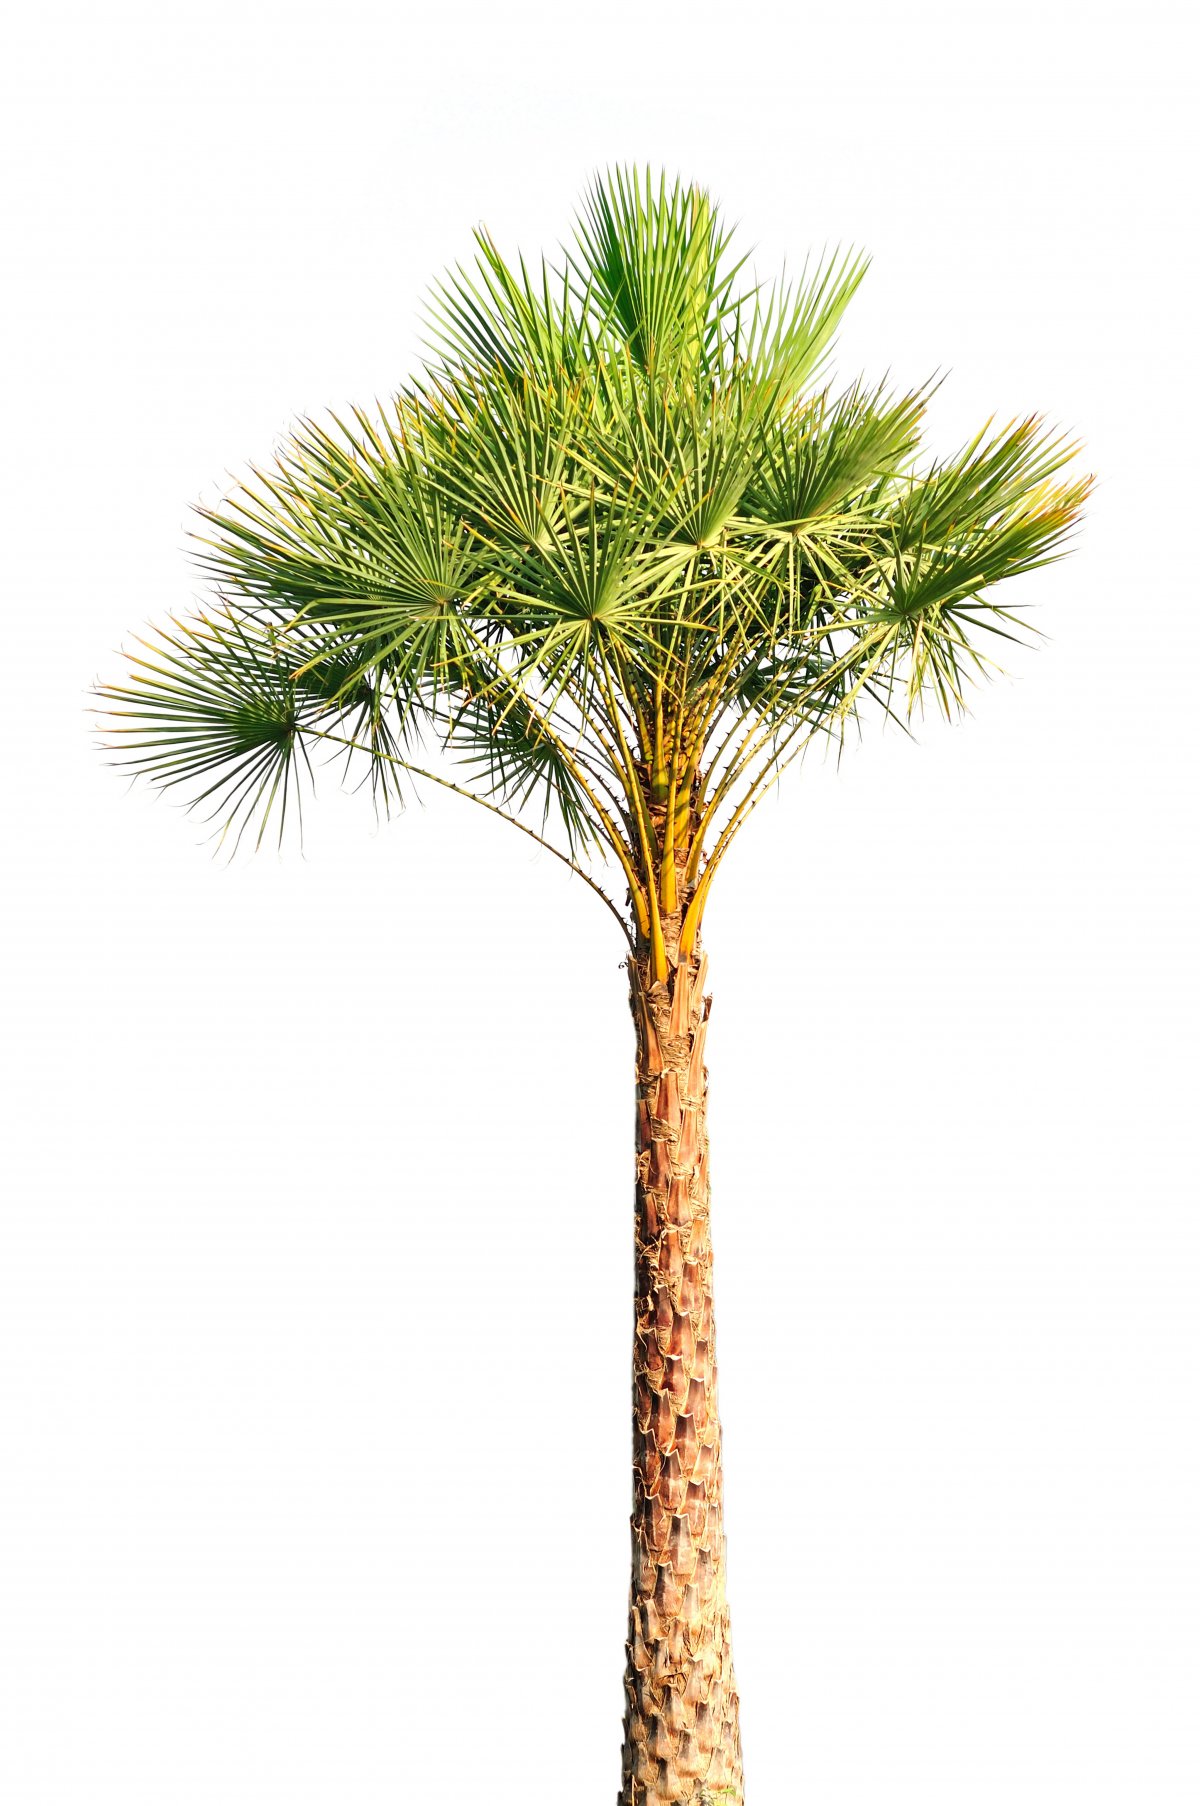 Subtropical Palm Tree Pictures